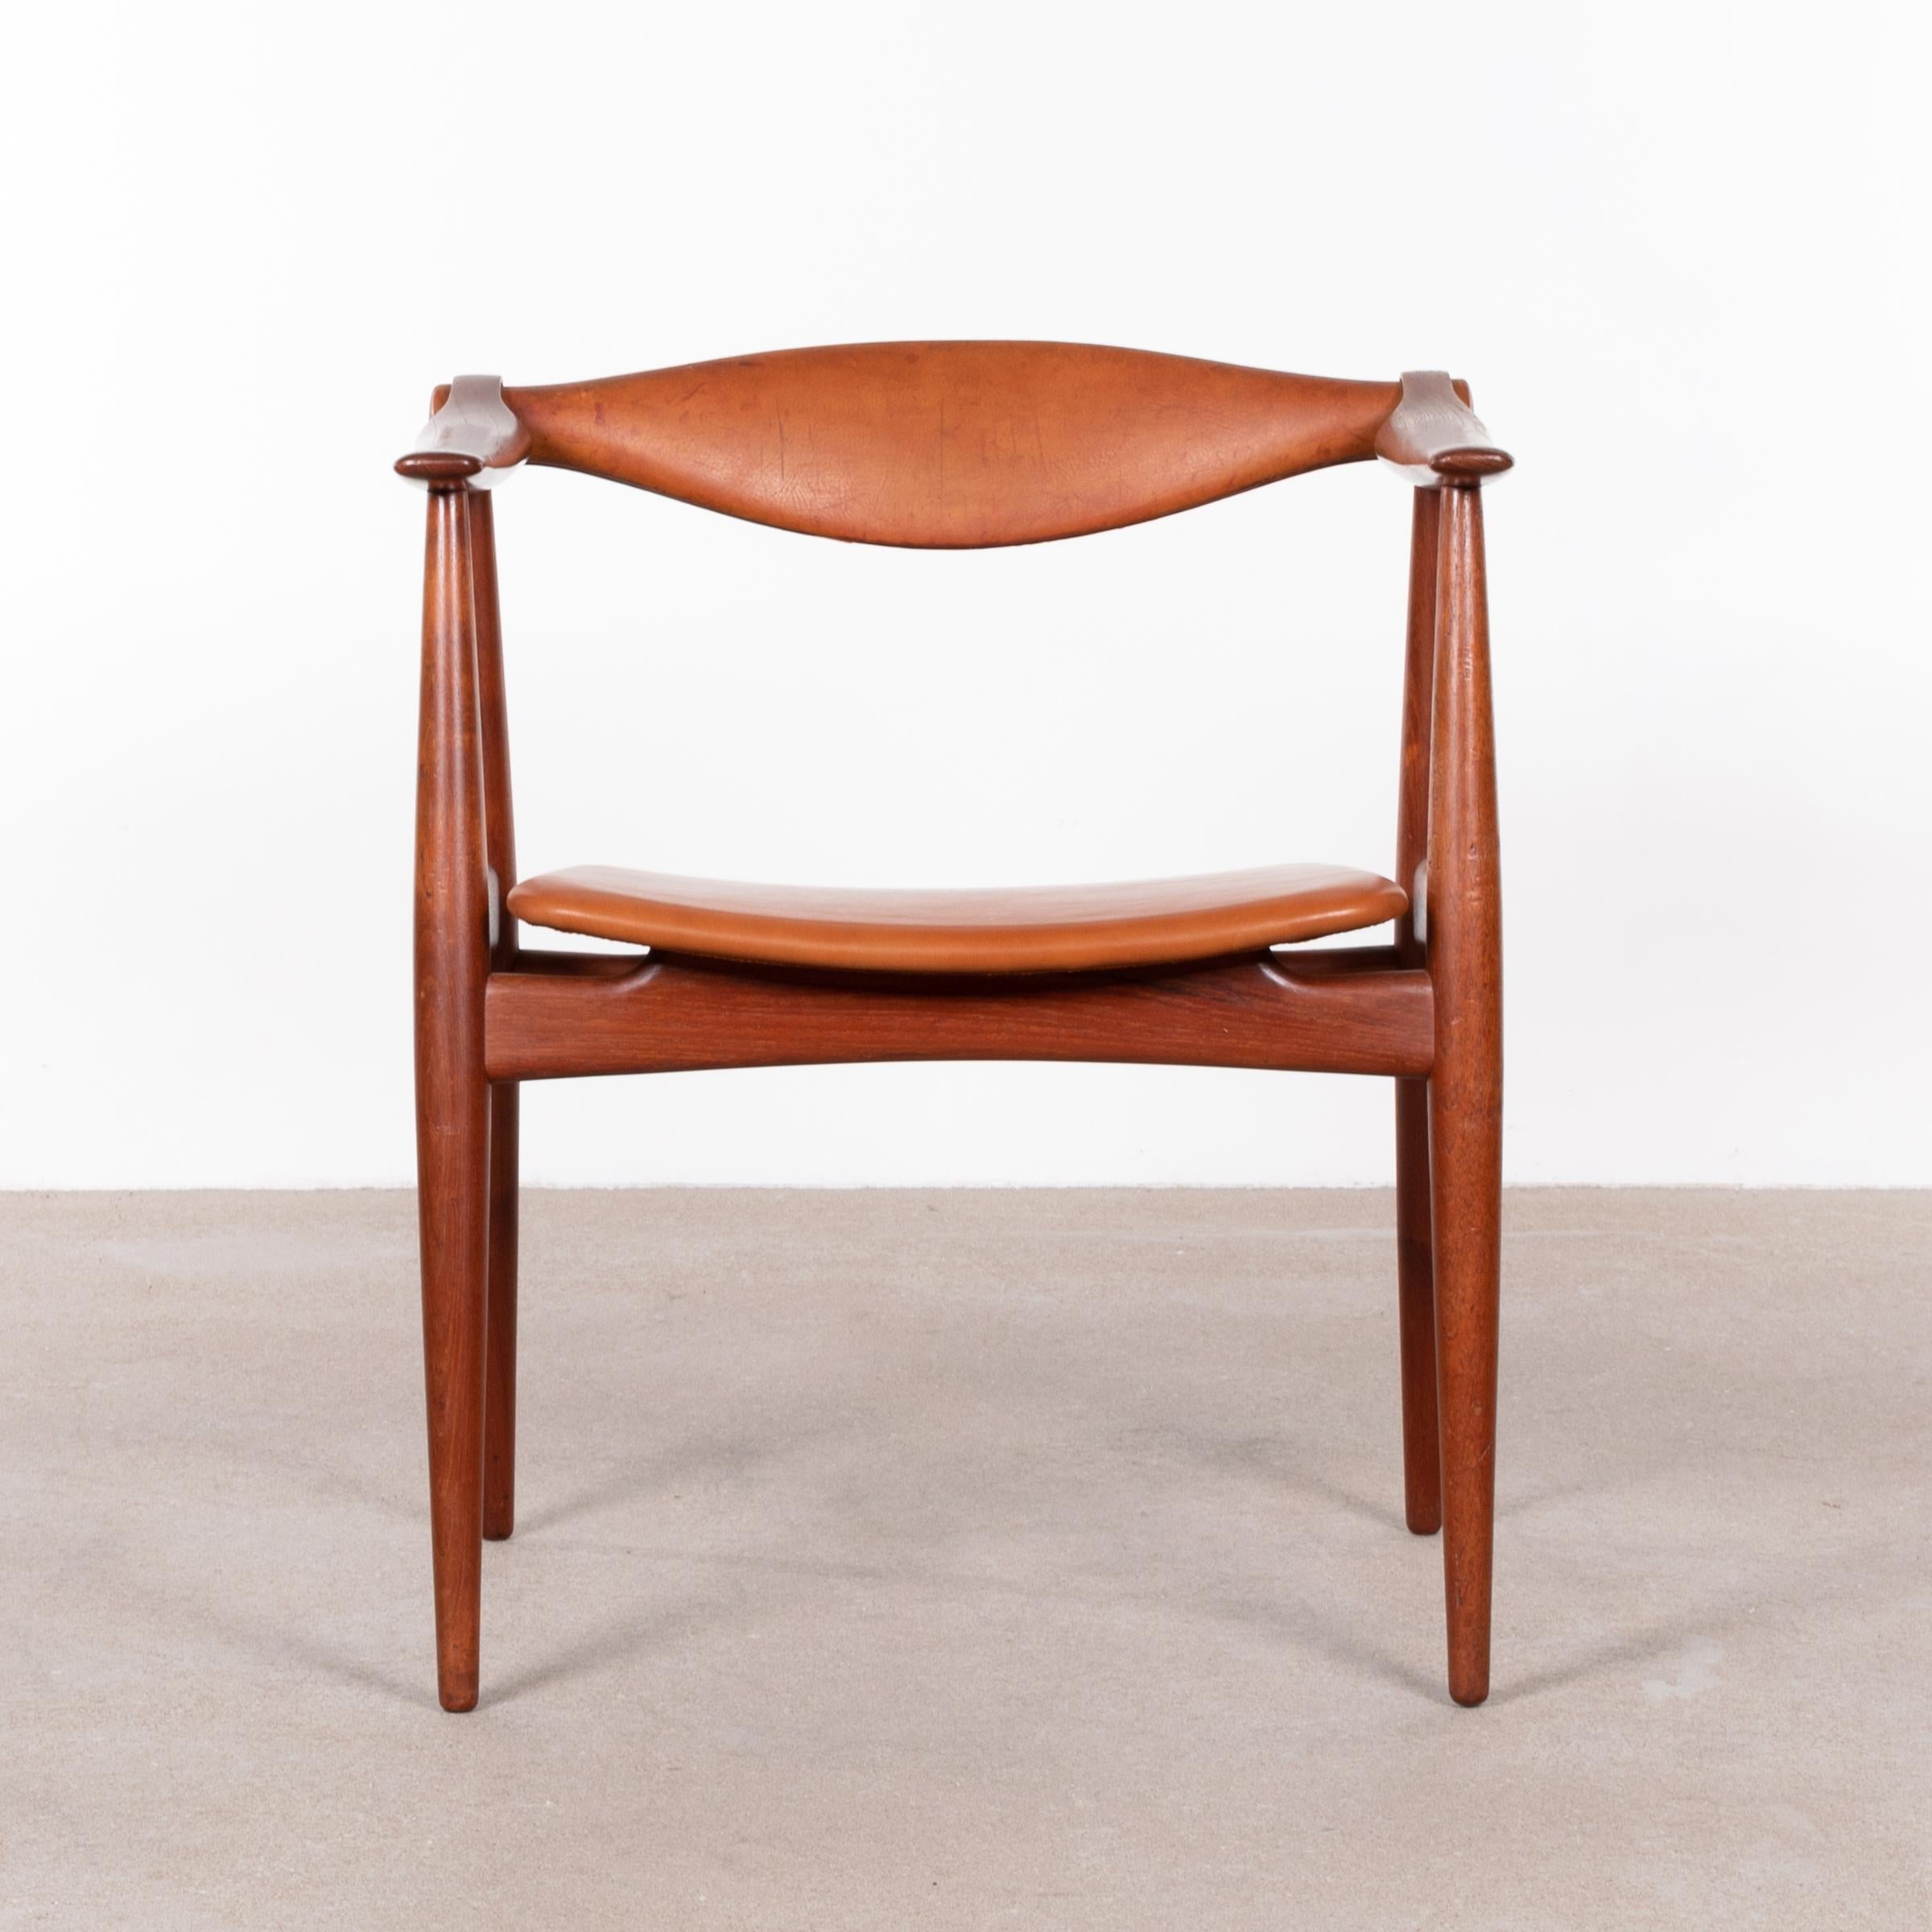 Hans Wegner CH34 Chair in Teak and Cognac Leather for Carl Hansen & Søn, Denmark 2